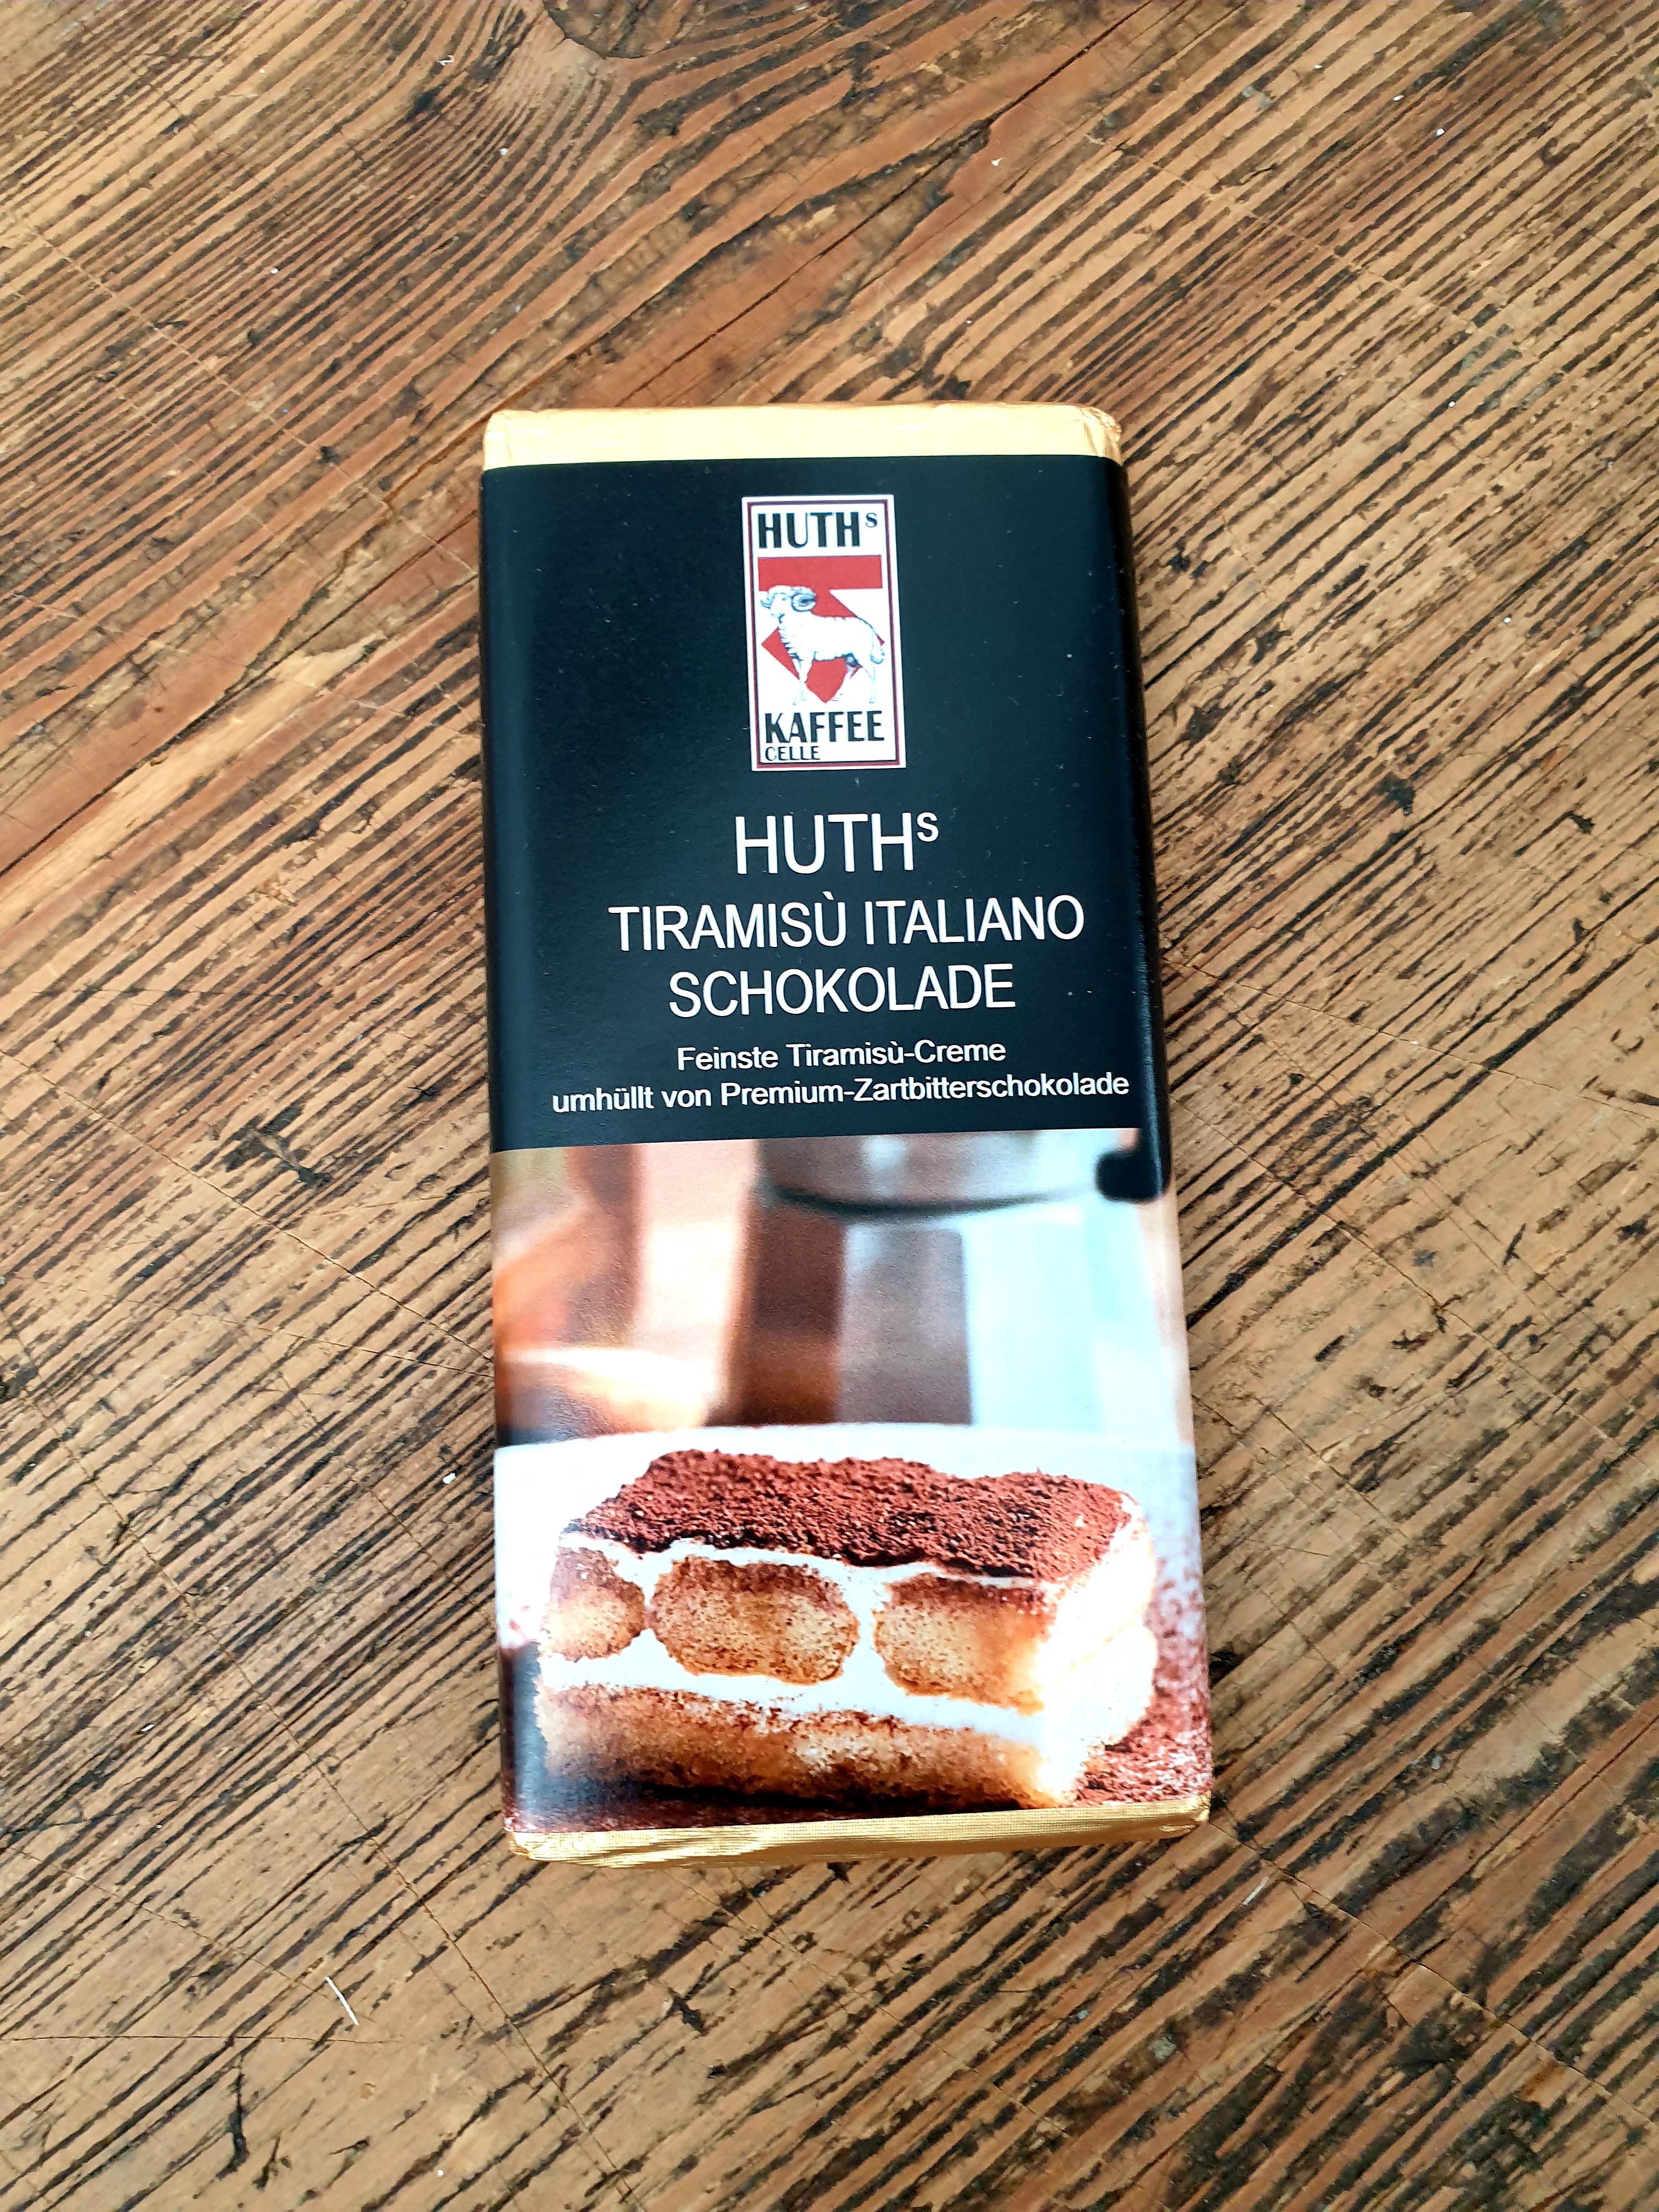 Hutht's  Schokolade Tiramisu Italiano  